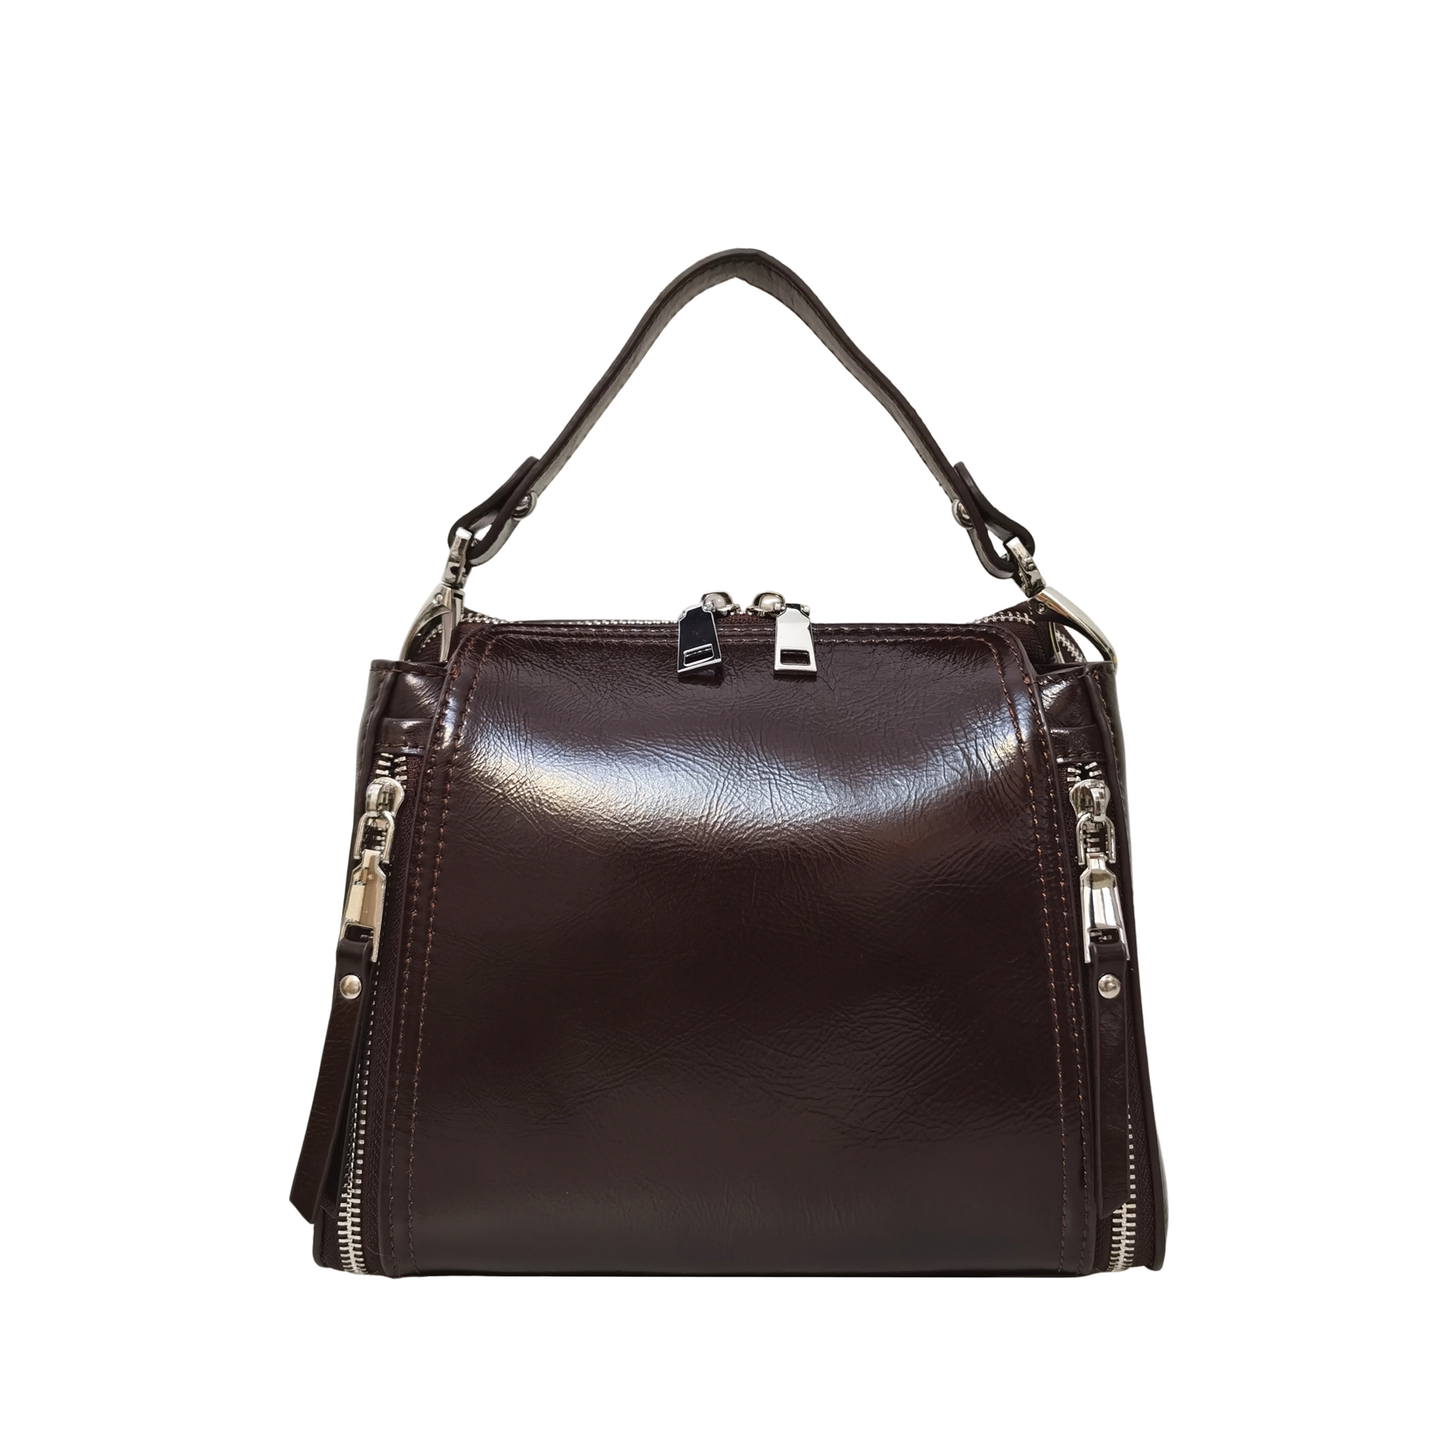 Women's genuine waxed cowhide leather handbag Boling design